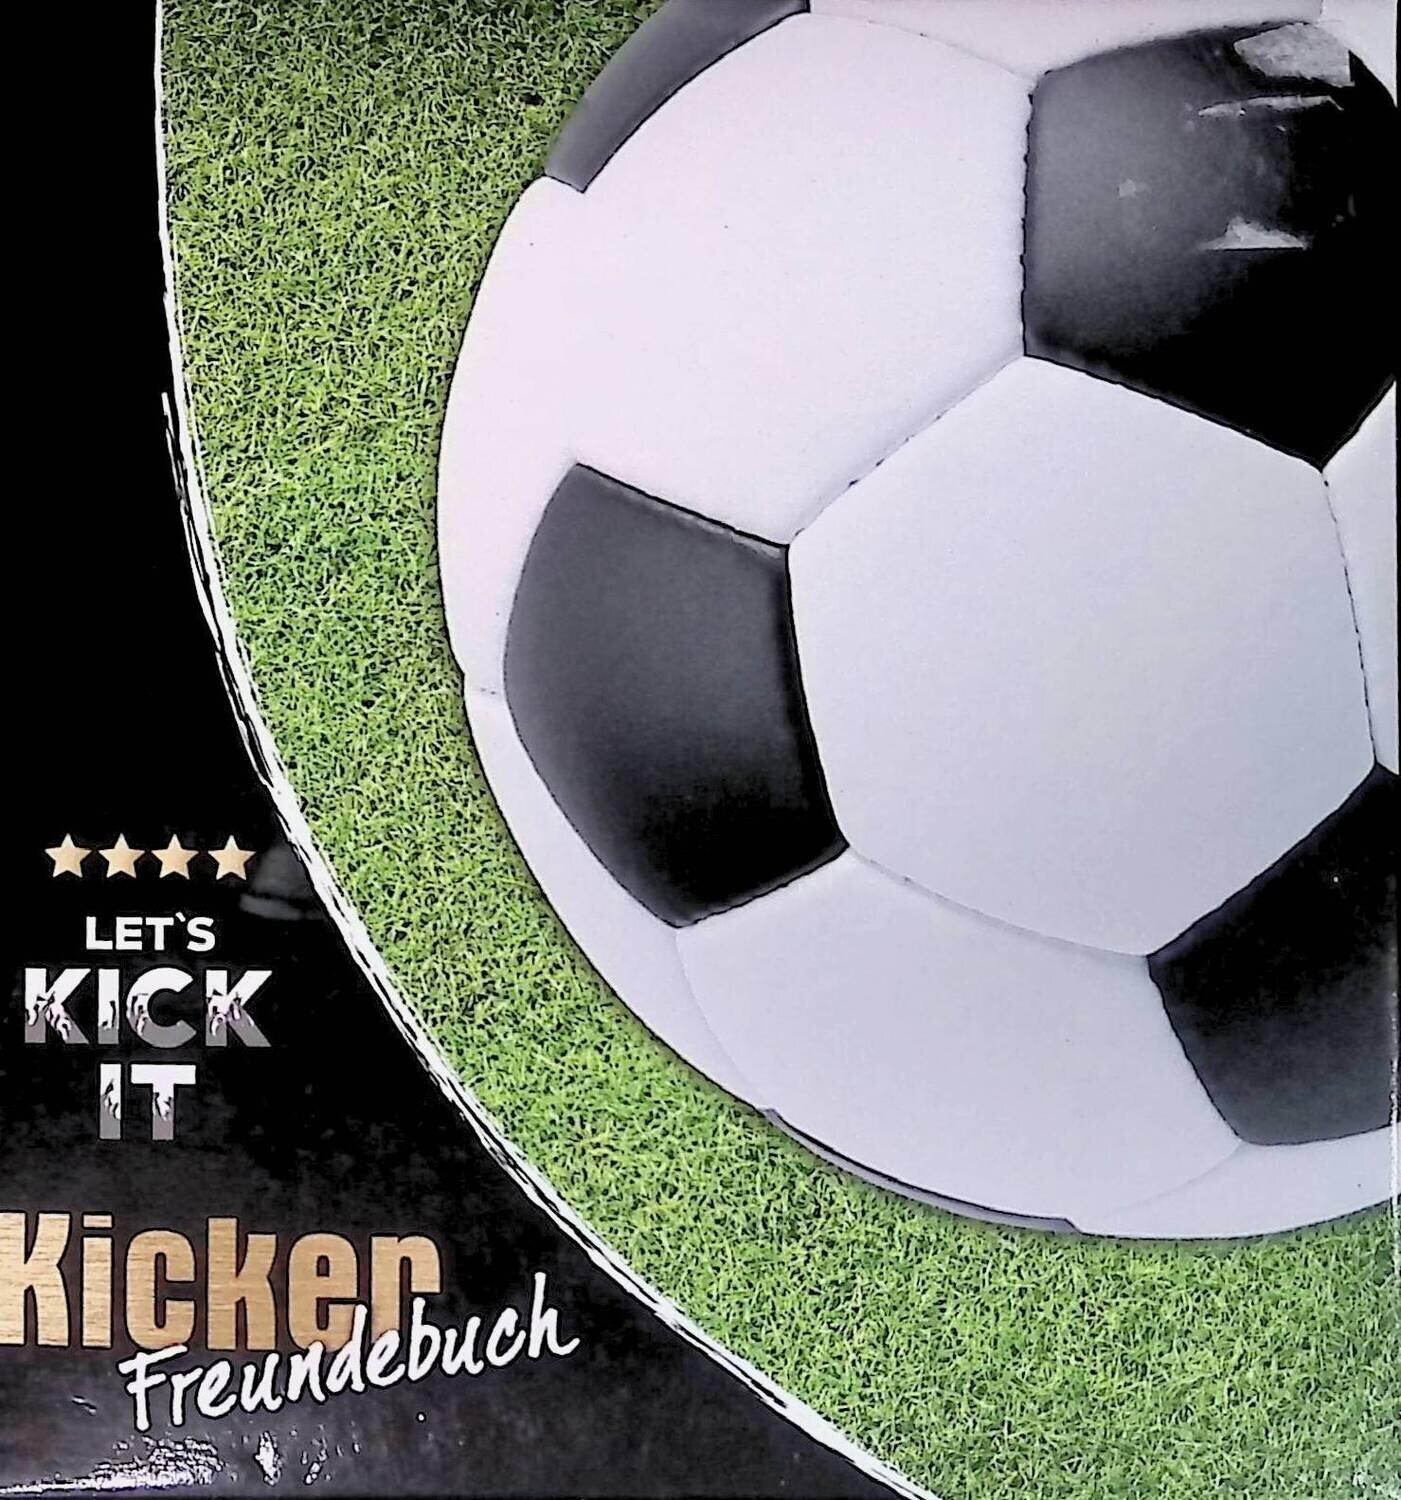 Let's Kick it. Kicker Fussball Freundebuch; Автор не указан